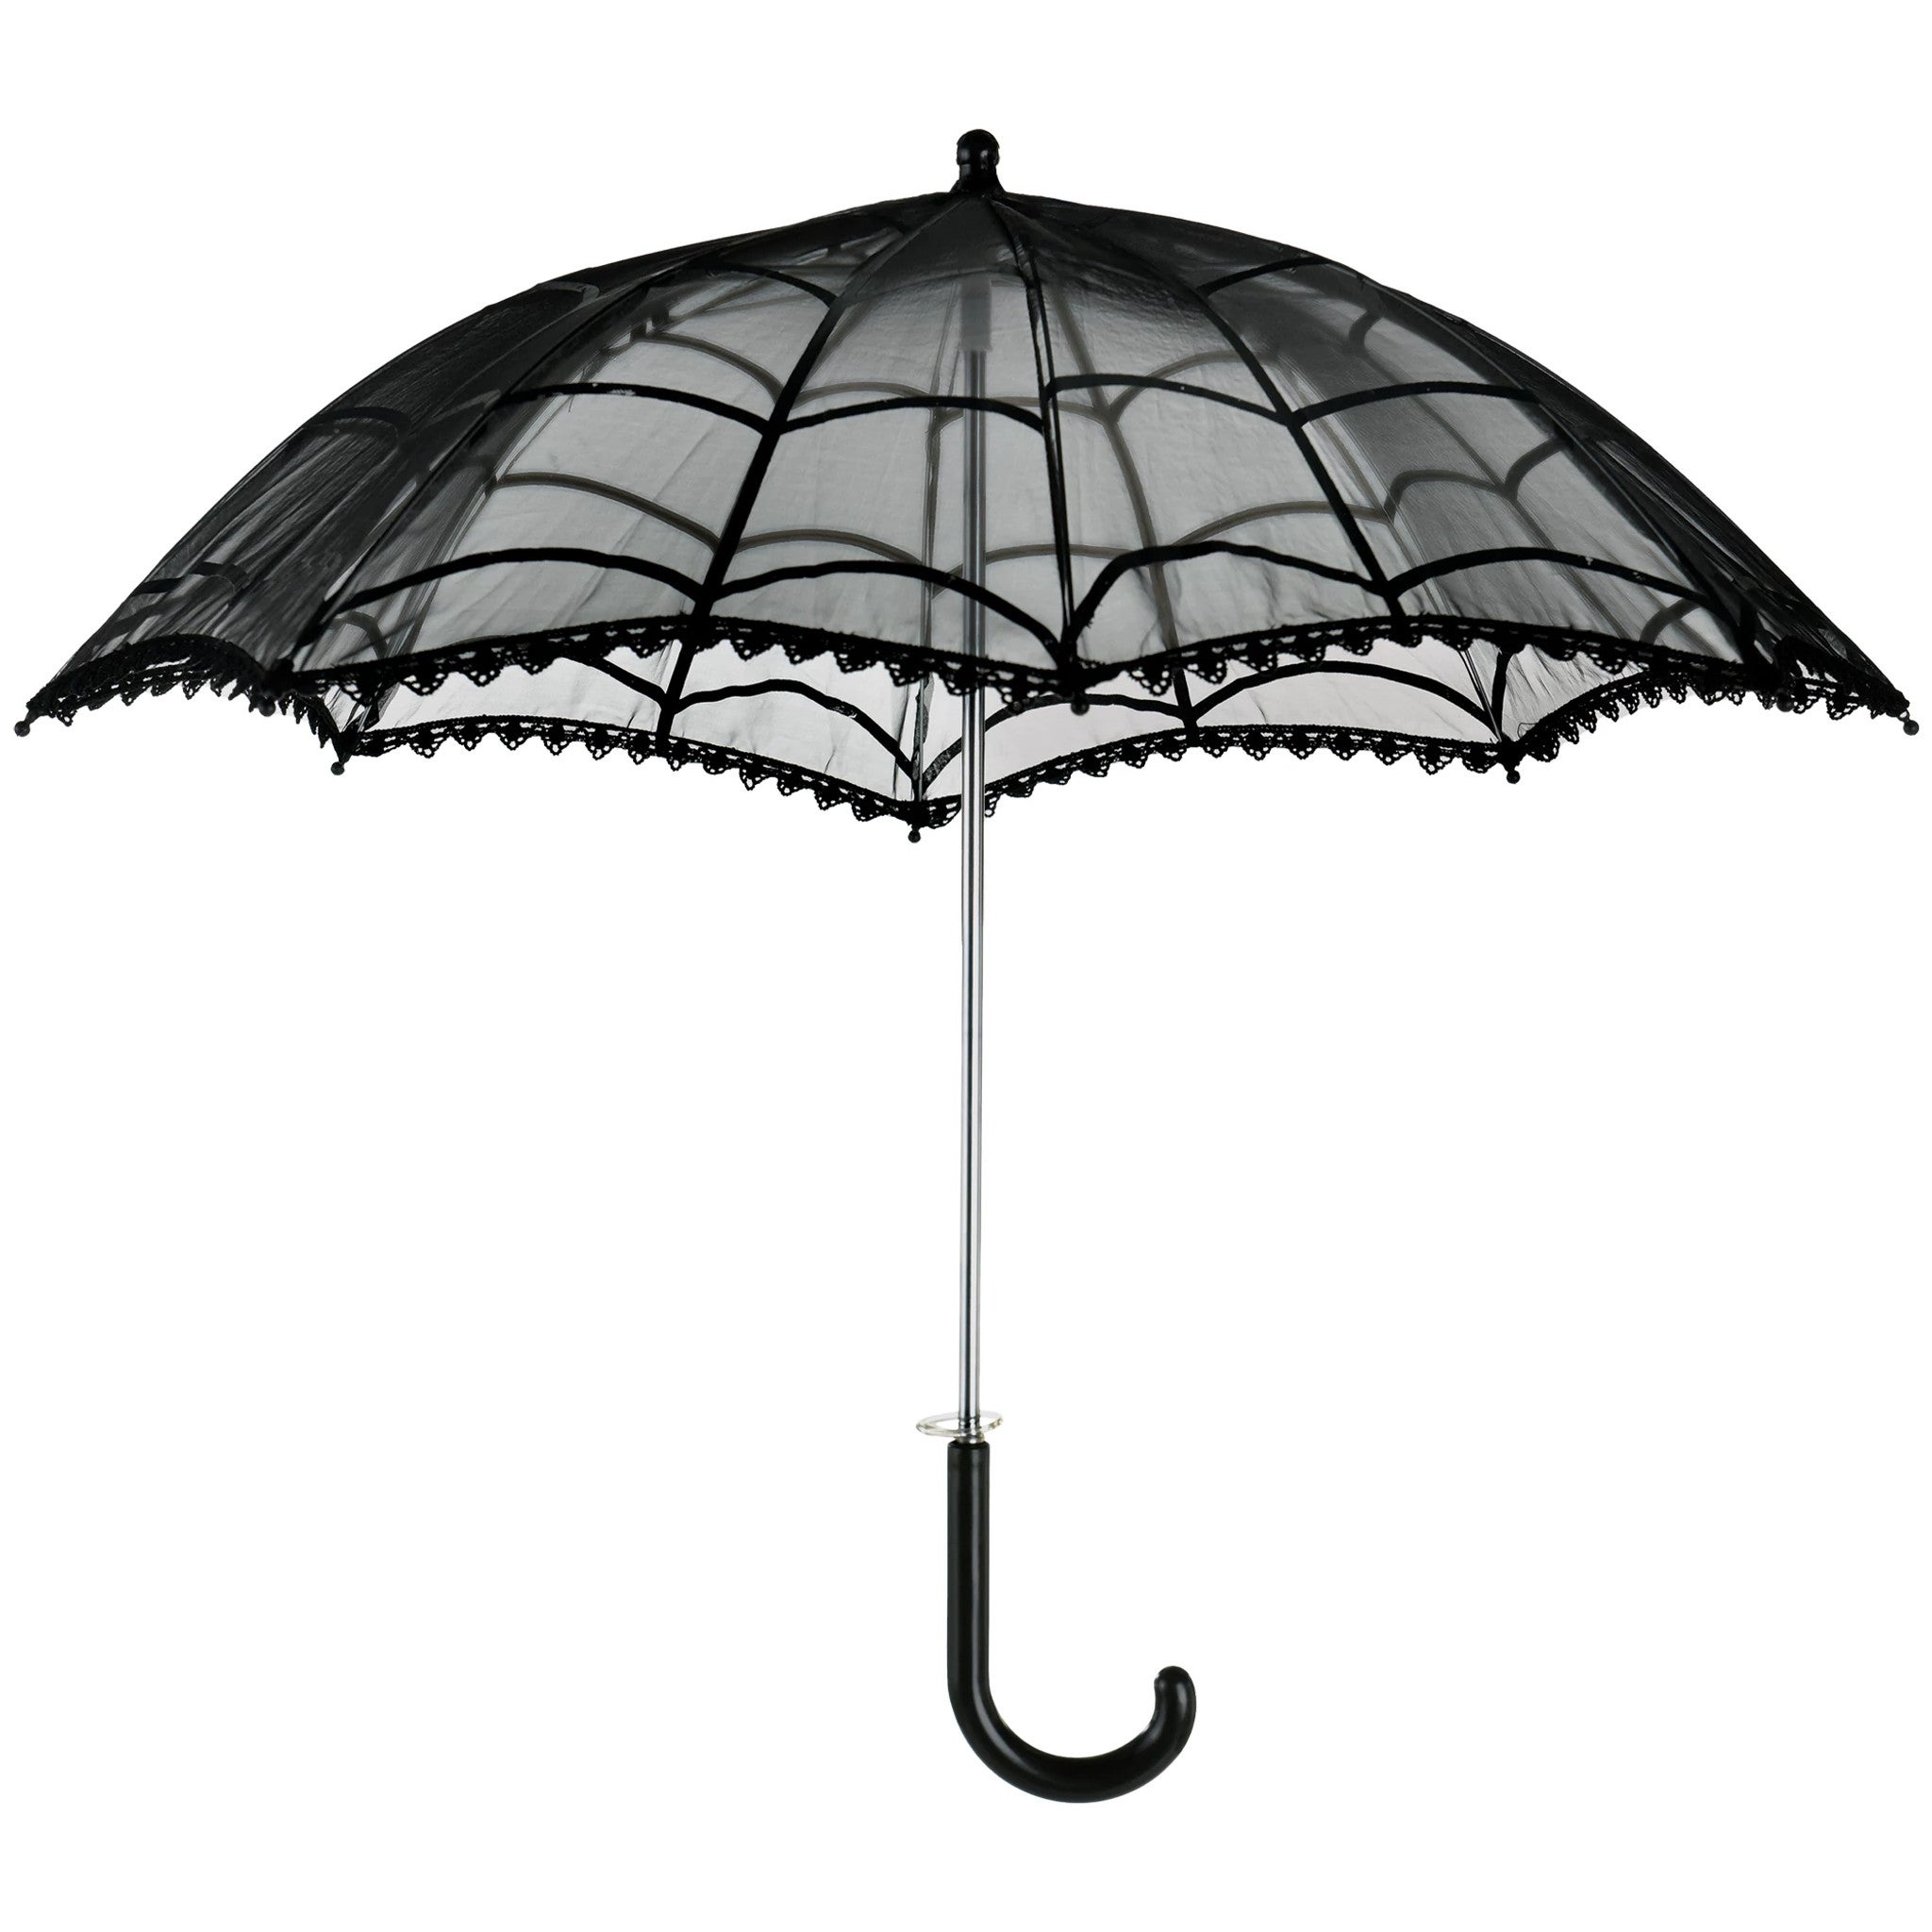 A sheer black parasol